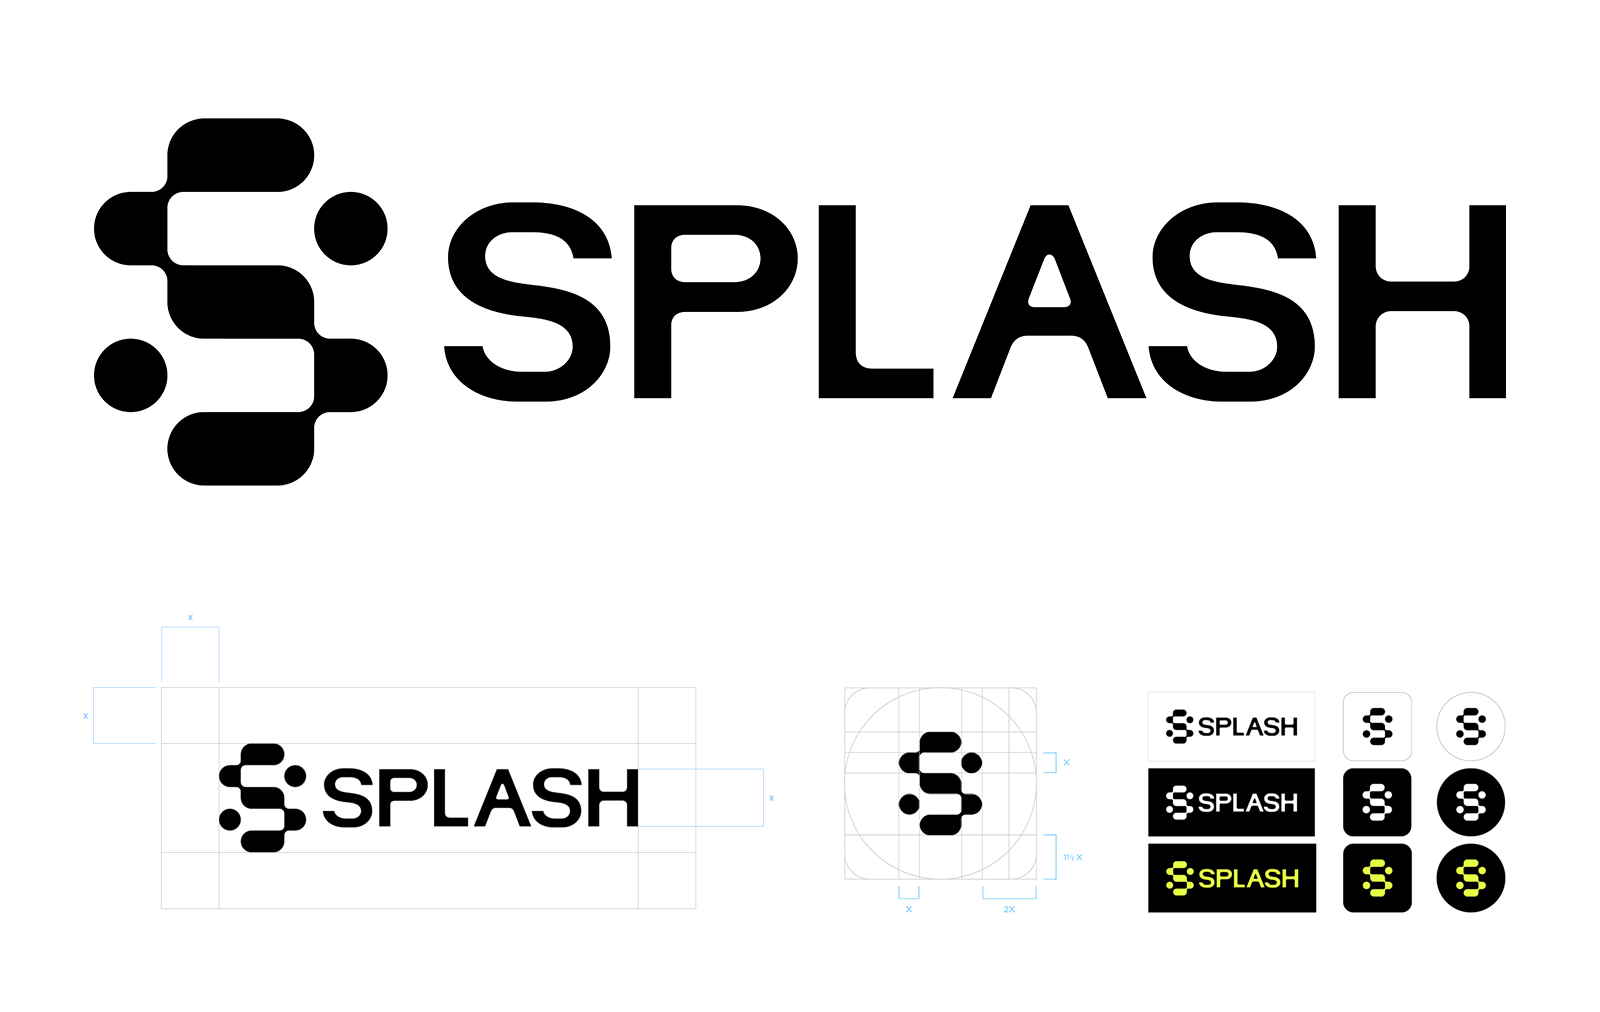 Several Splash logos